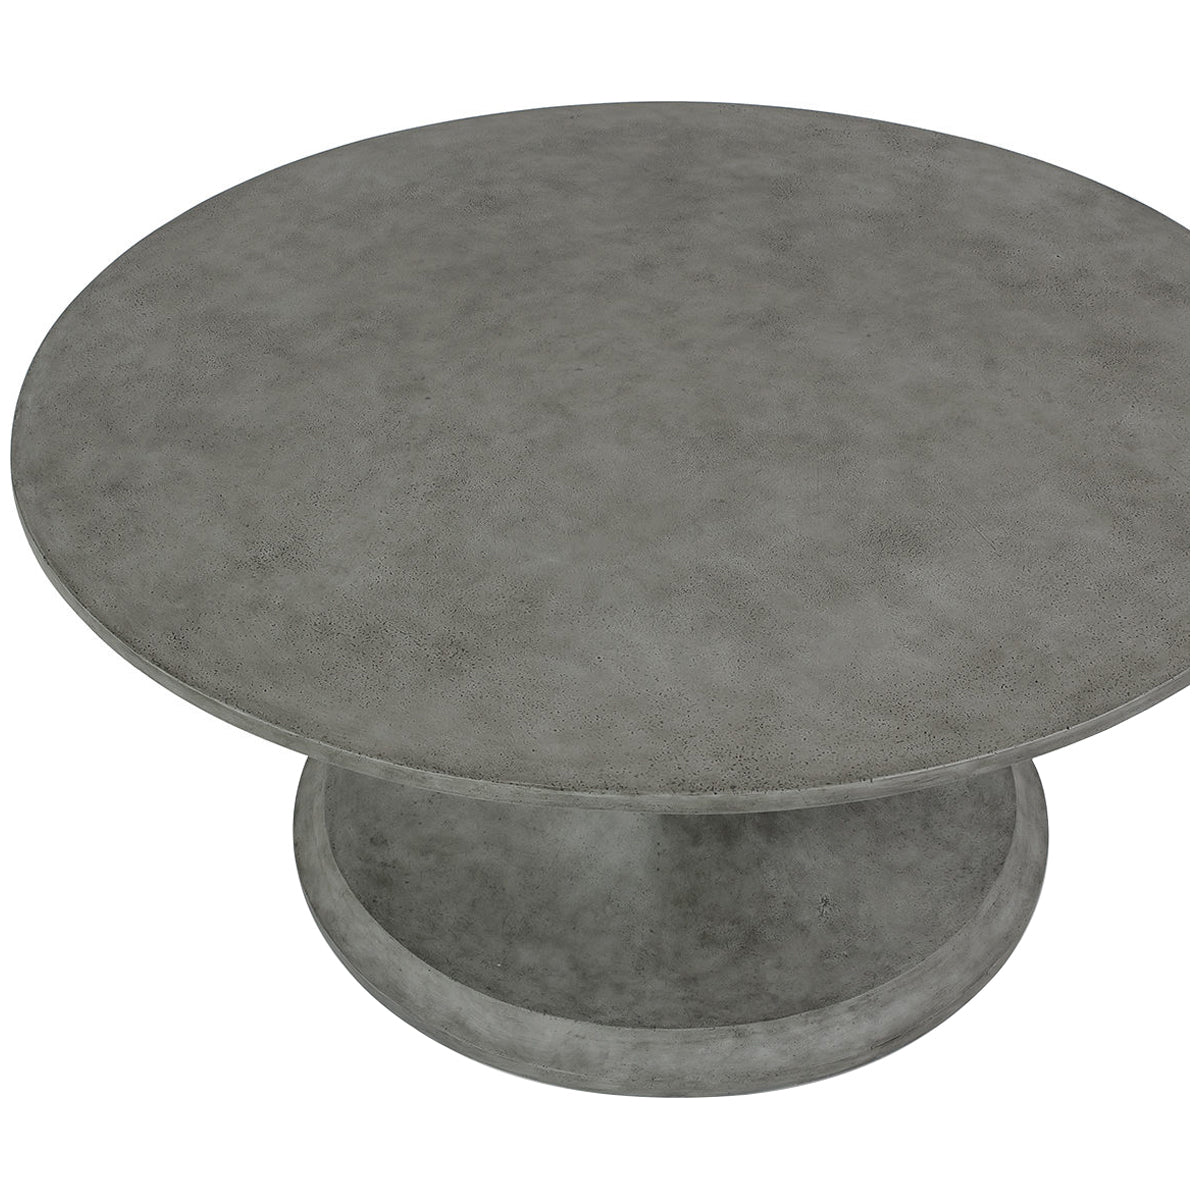 Palecek Spruce Outdoor Coffee Table, Grey